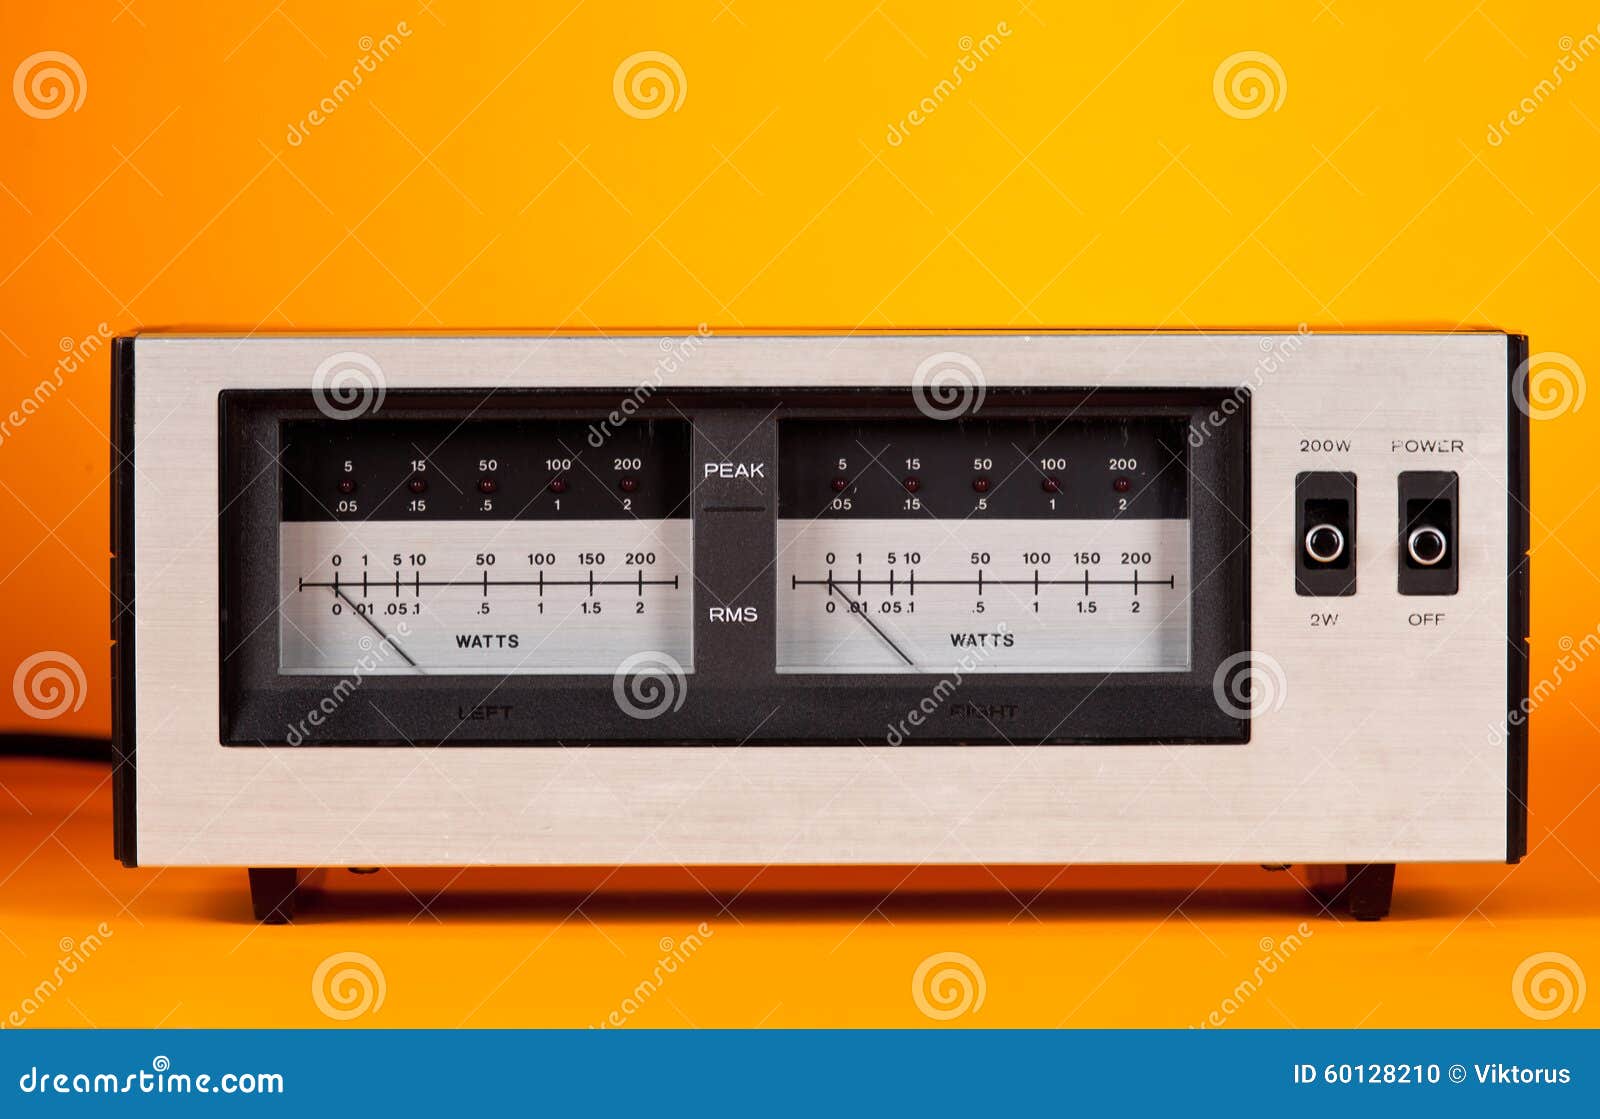 New Old Stock Vintage Analog VU Panel Meter L R Audio Meter Amp Sound dB 